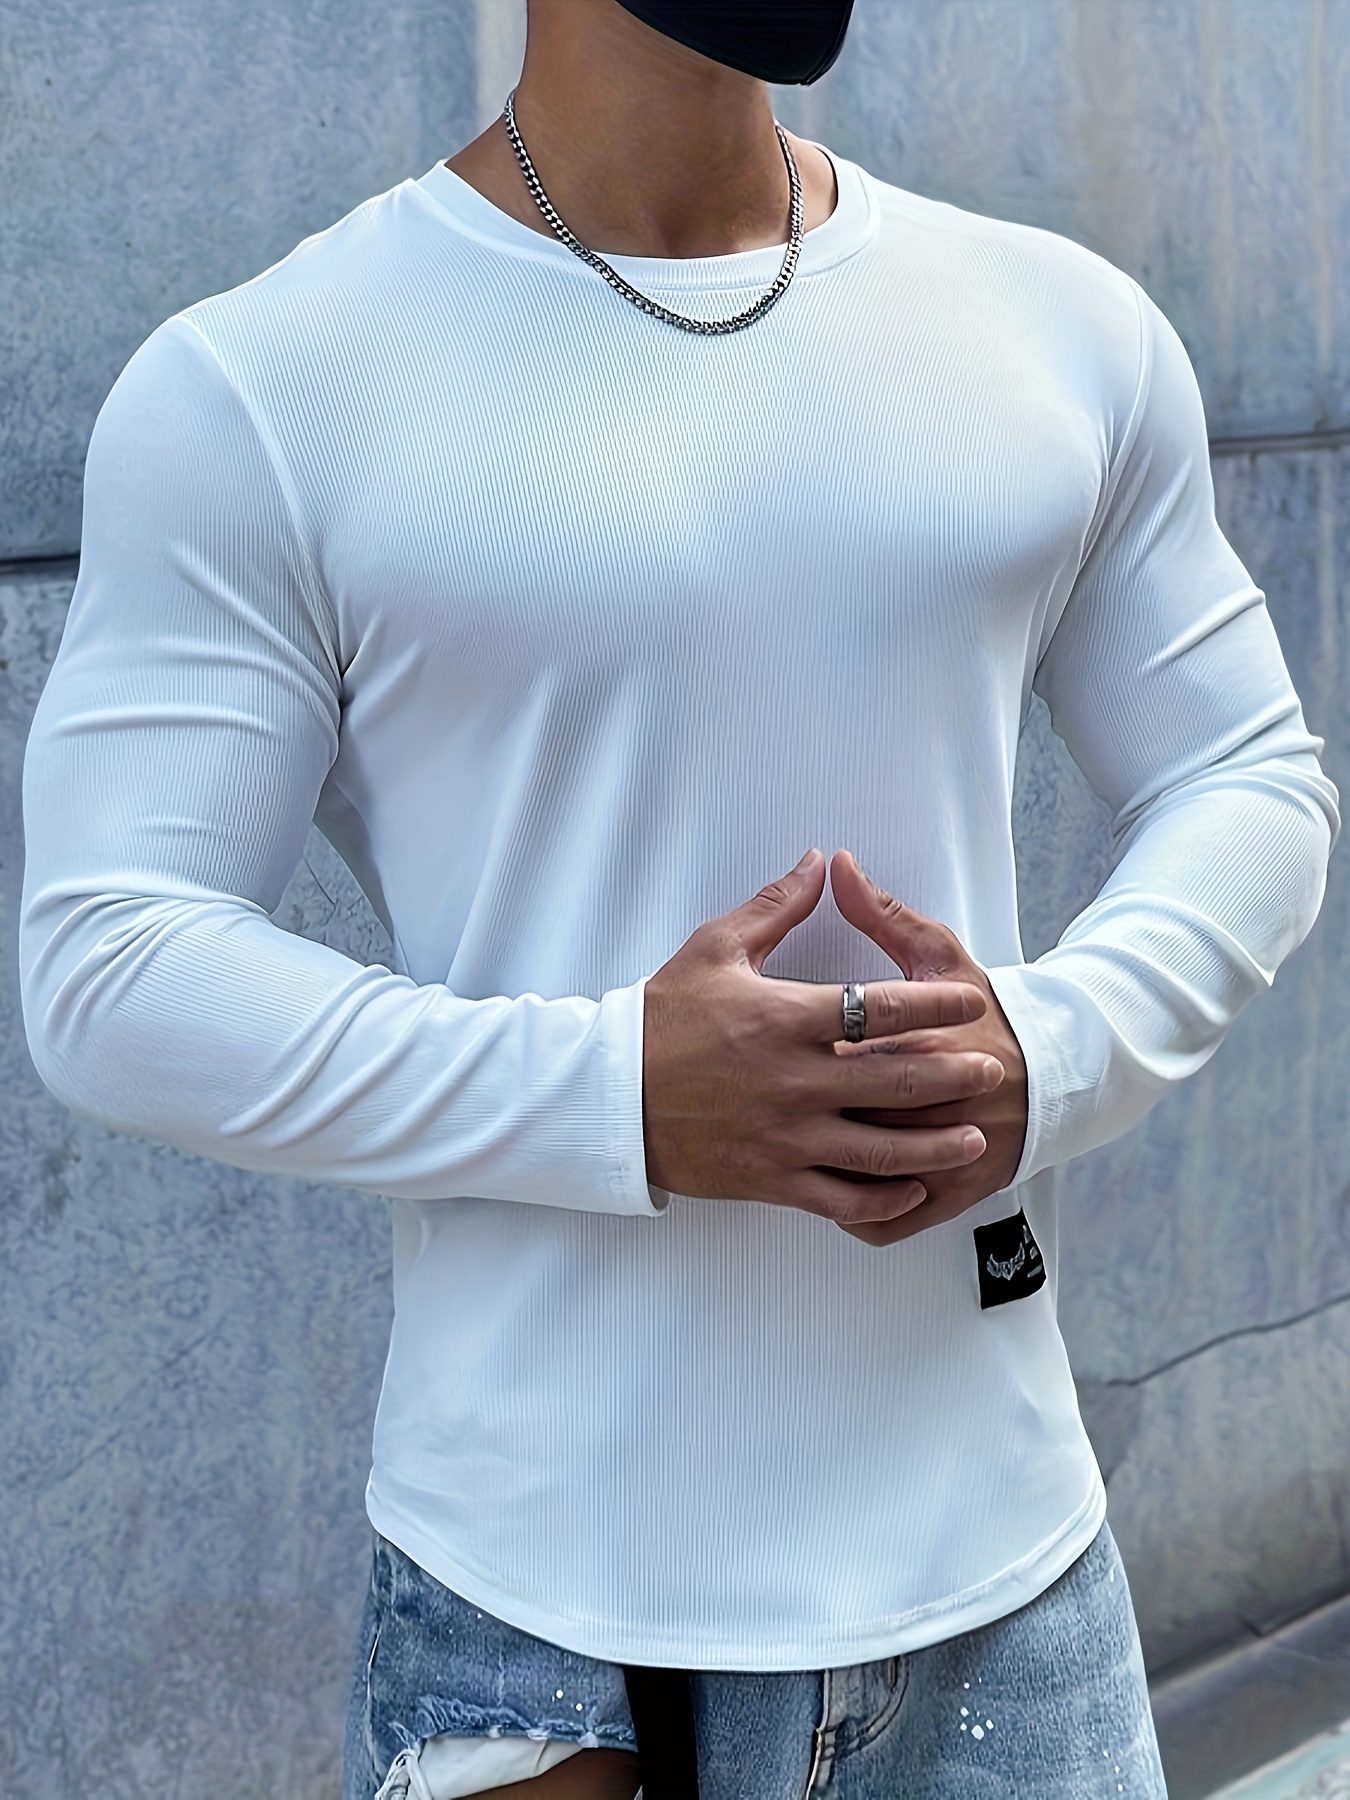 Male Summer Solid Print T Shirt Turn Down Collar Raglan Sleeve Tops T Shirt  Mock Neck Shirts for Men